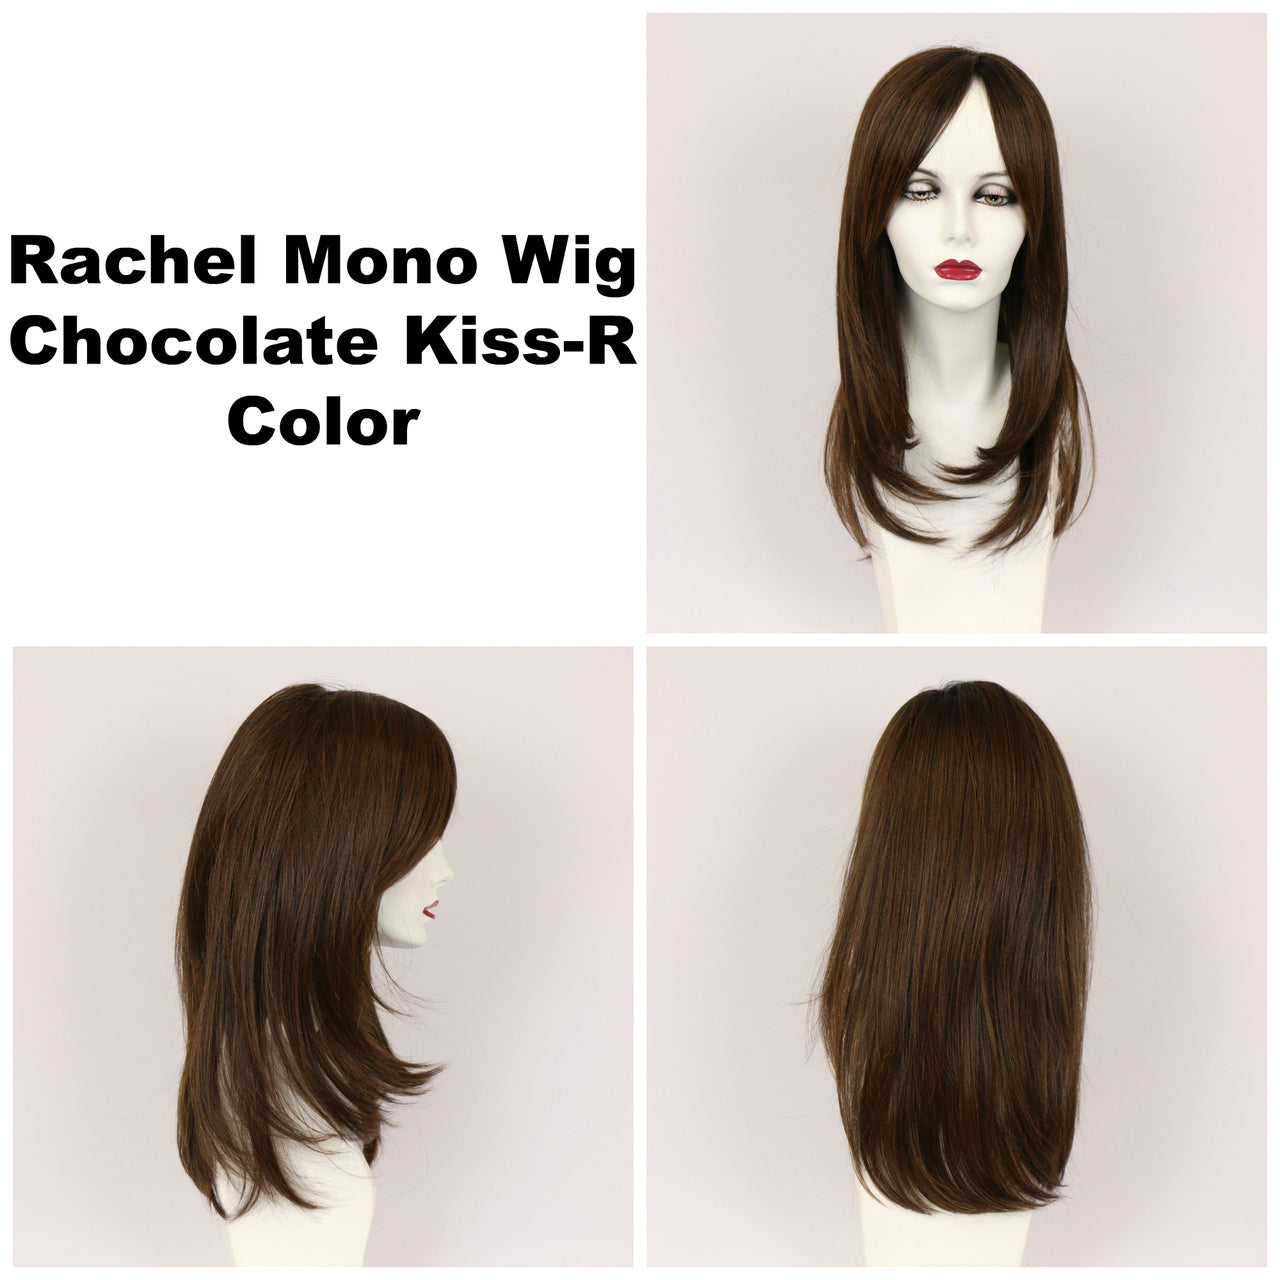 Chocolate Kiss-R / Rachel Monofilament w/ Roots / Long Wig